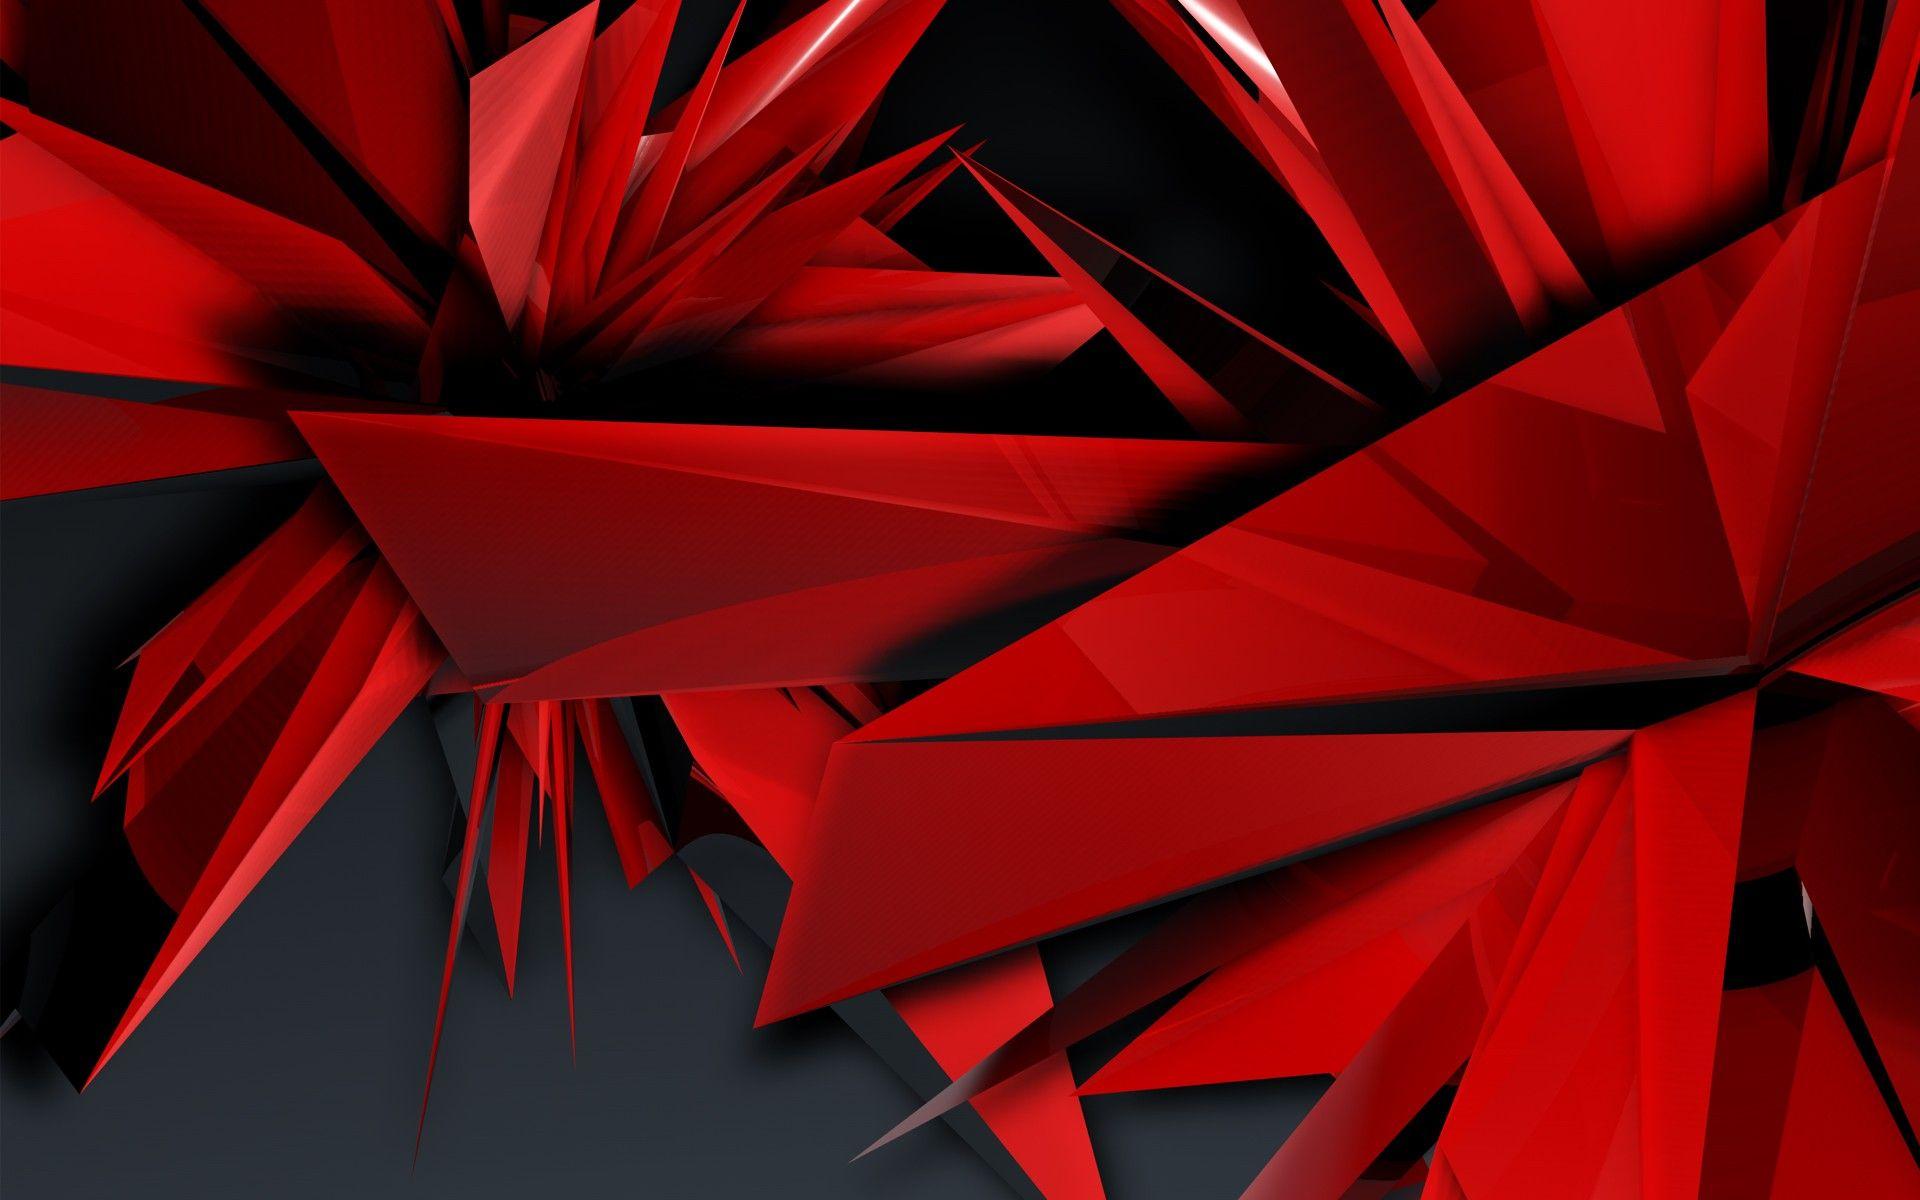 Broken Glass Red Abstract Wallpaper 28433